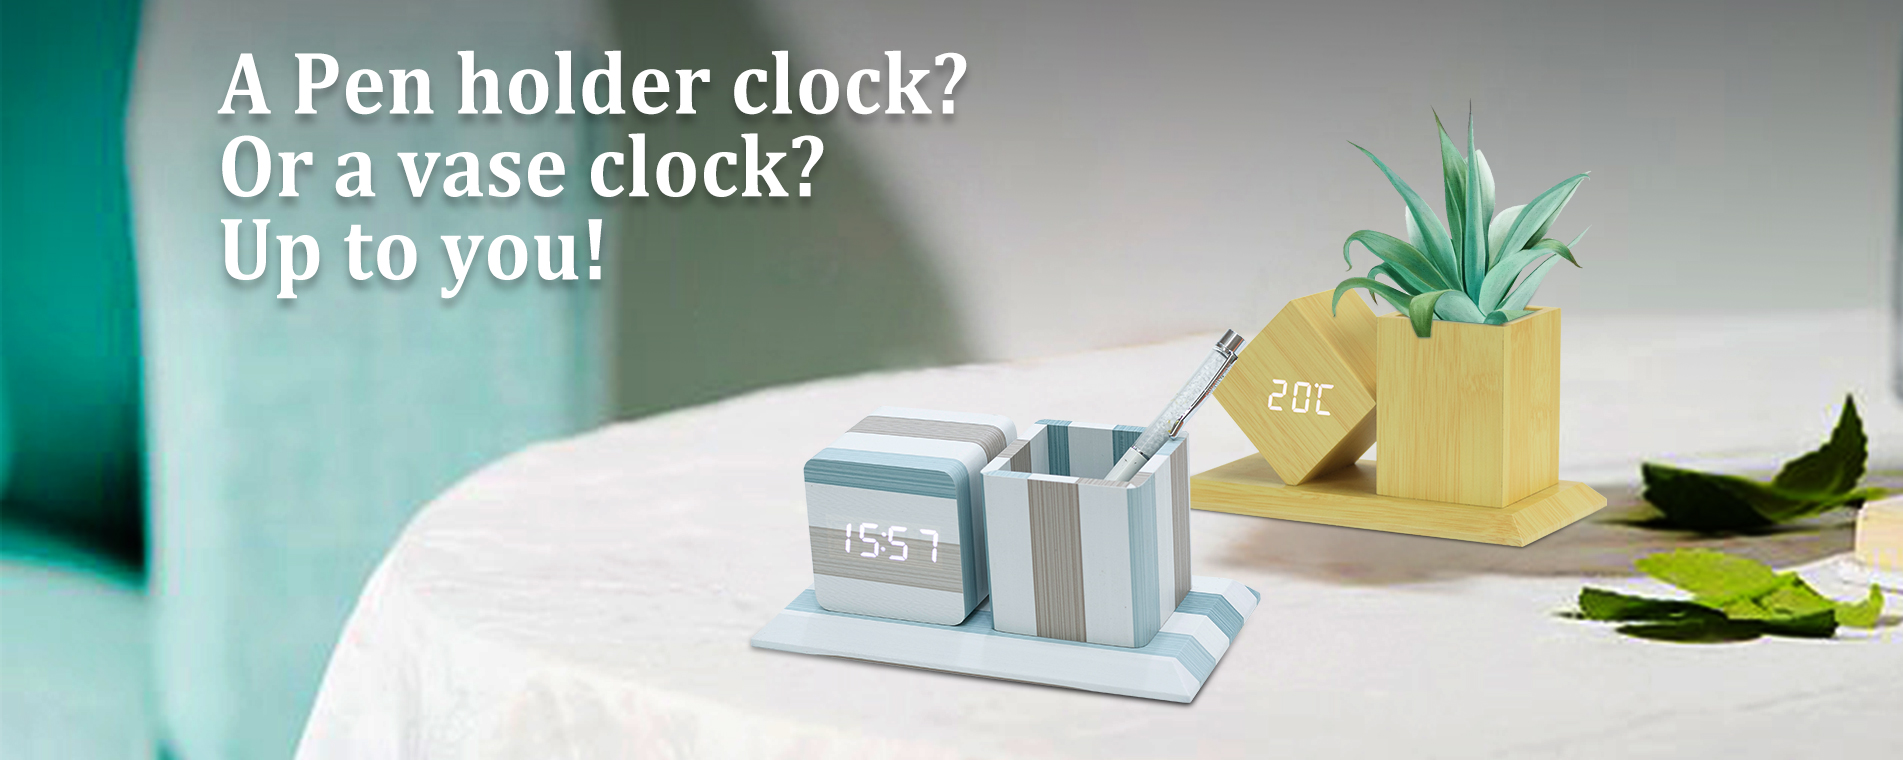 Pen holder clock or vase clock